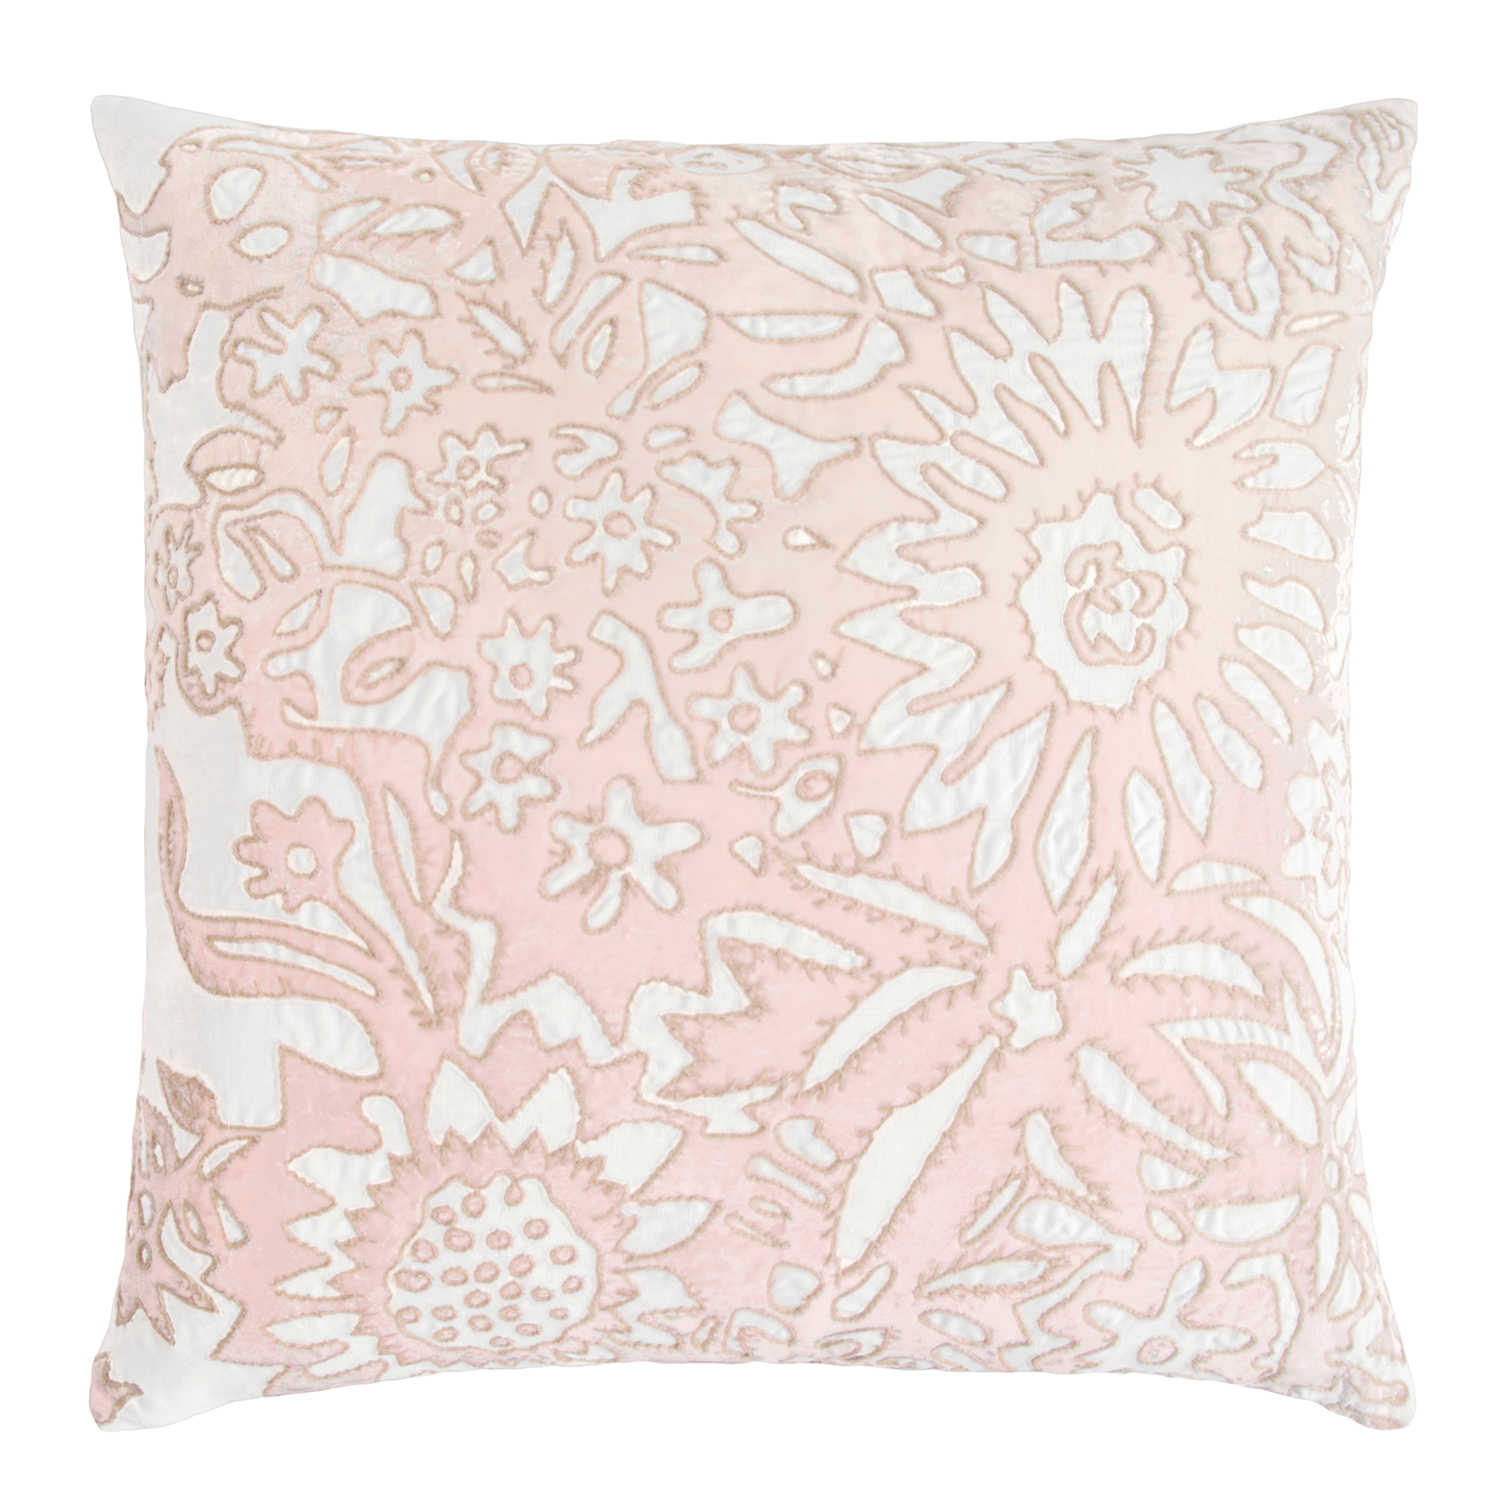 *Kevin OBrien Studio Garland Embroidered Velvet Applique Decorative Pillow